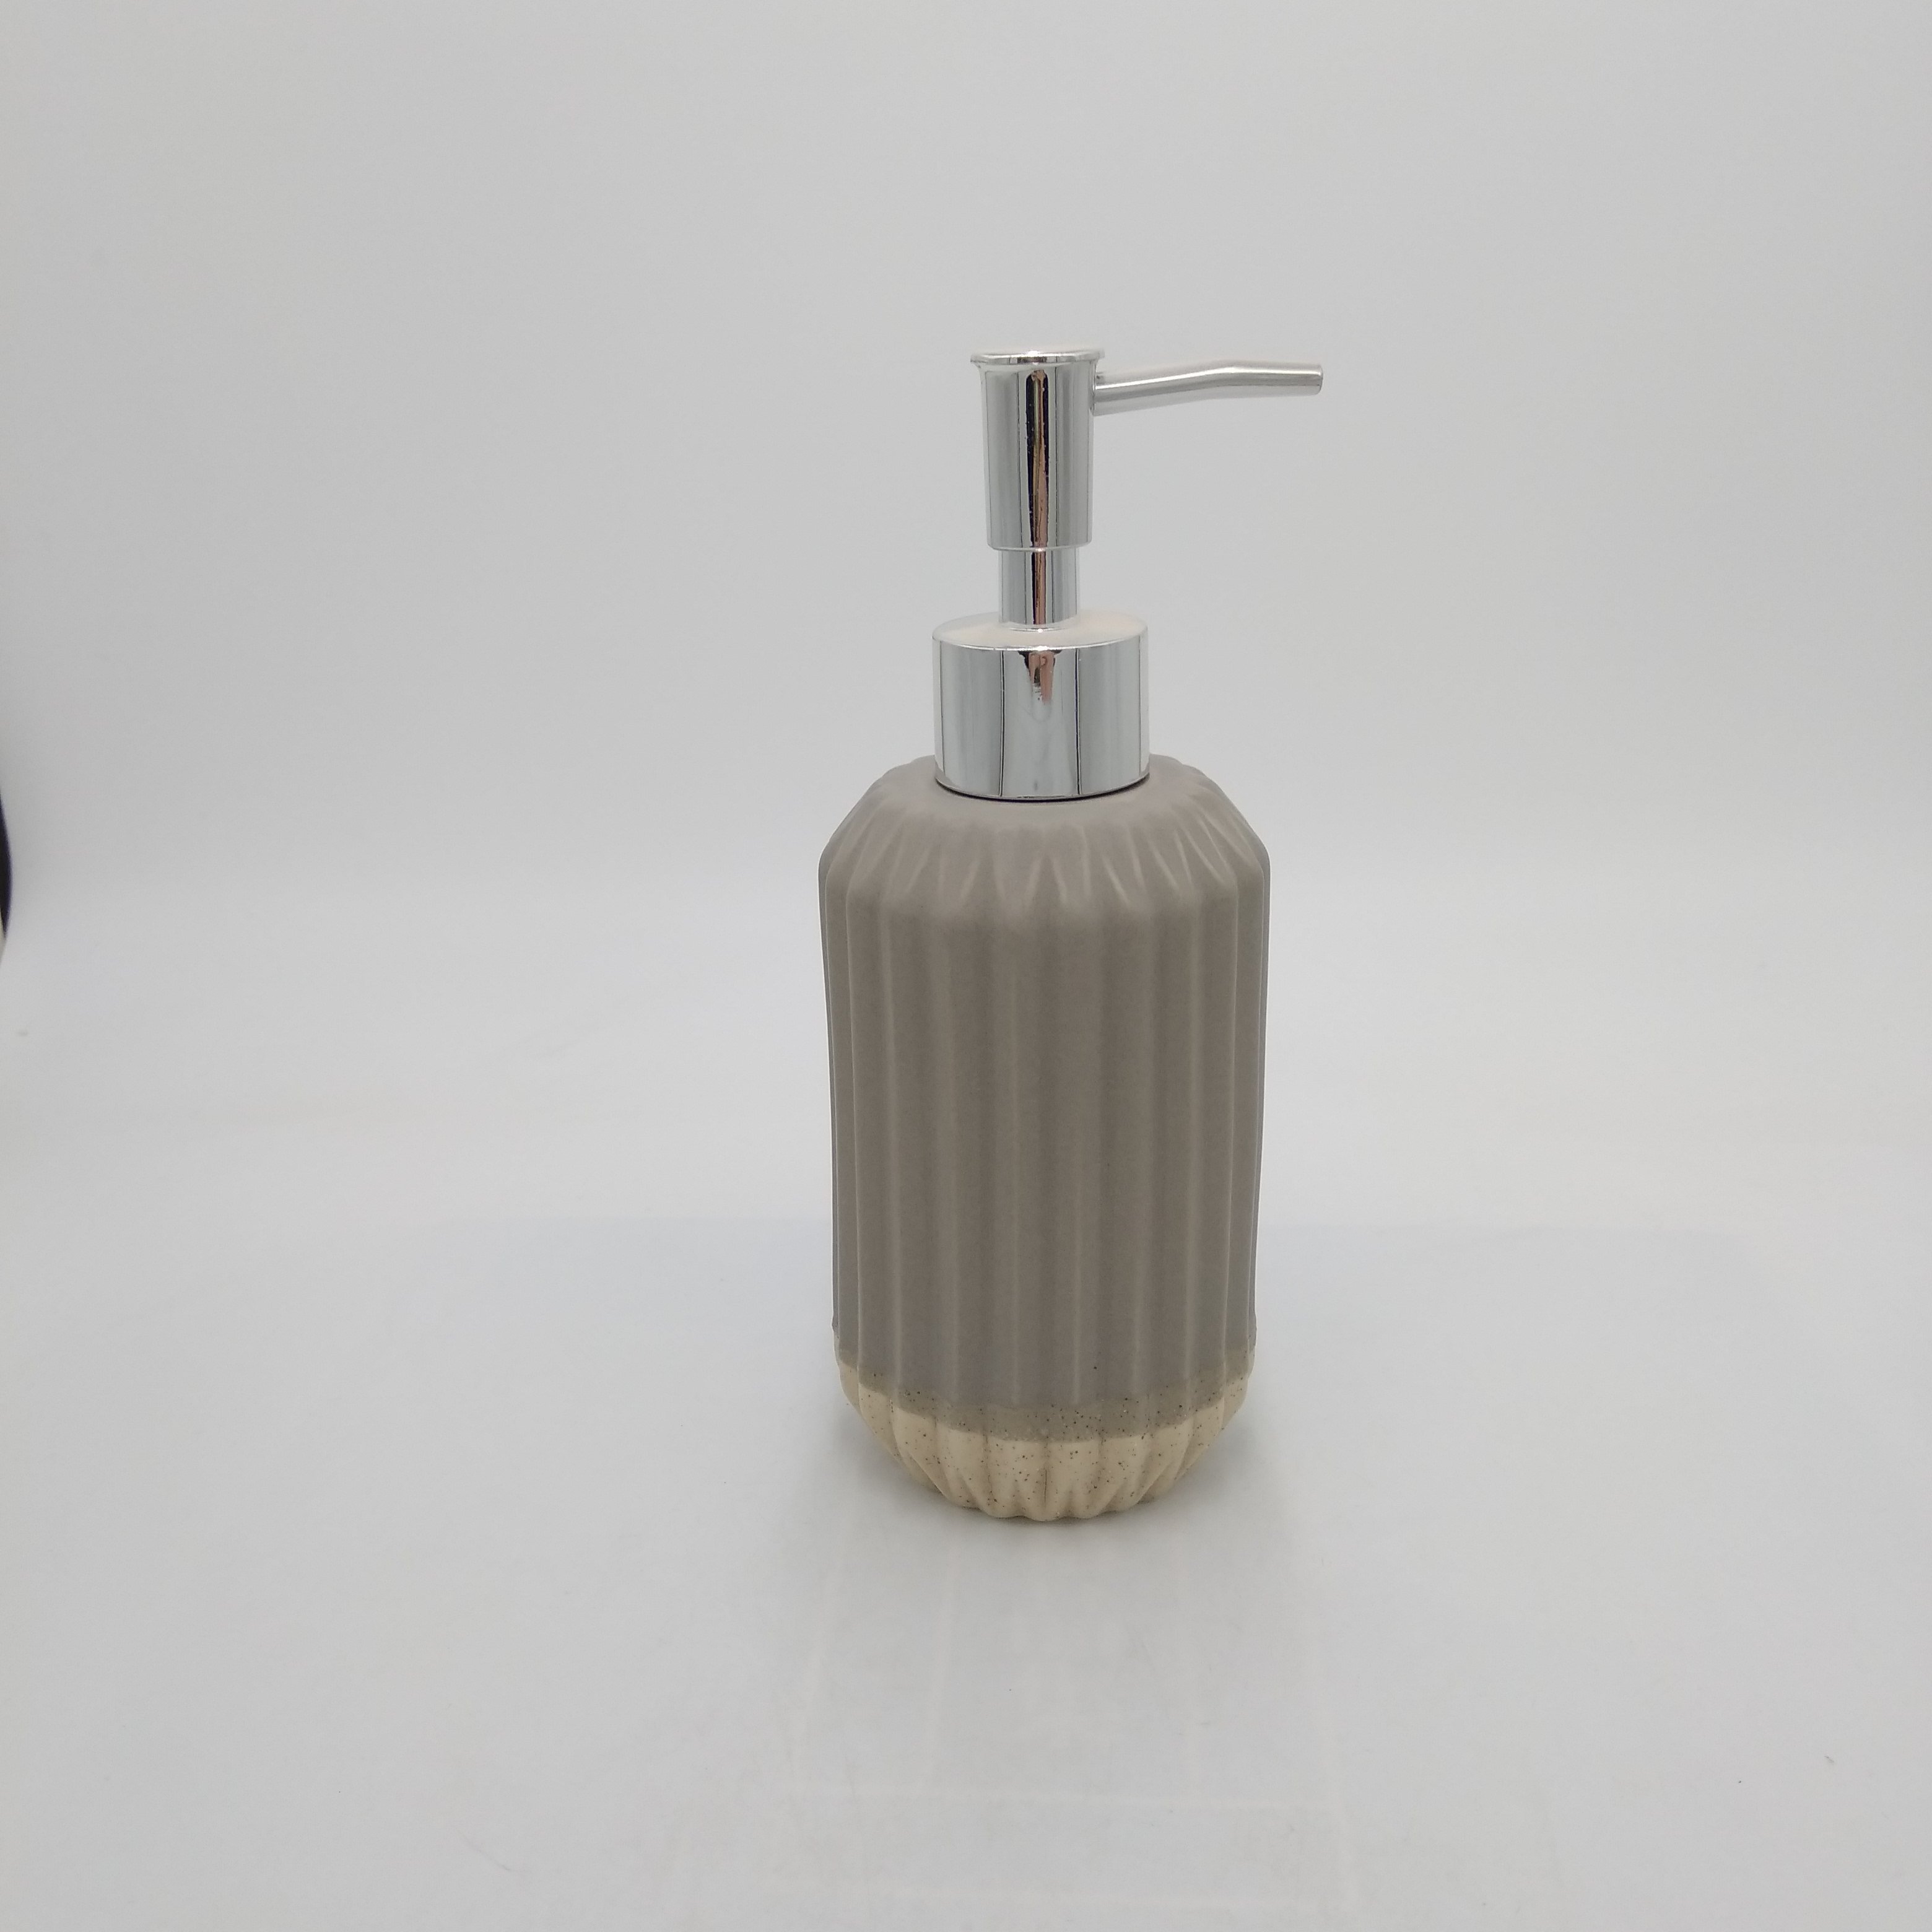 320ml white black ceramic cosmetic bottle with silver pump sprayer for liquid soap shampoo dispensing